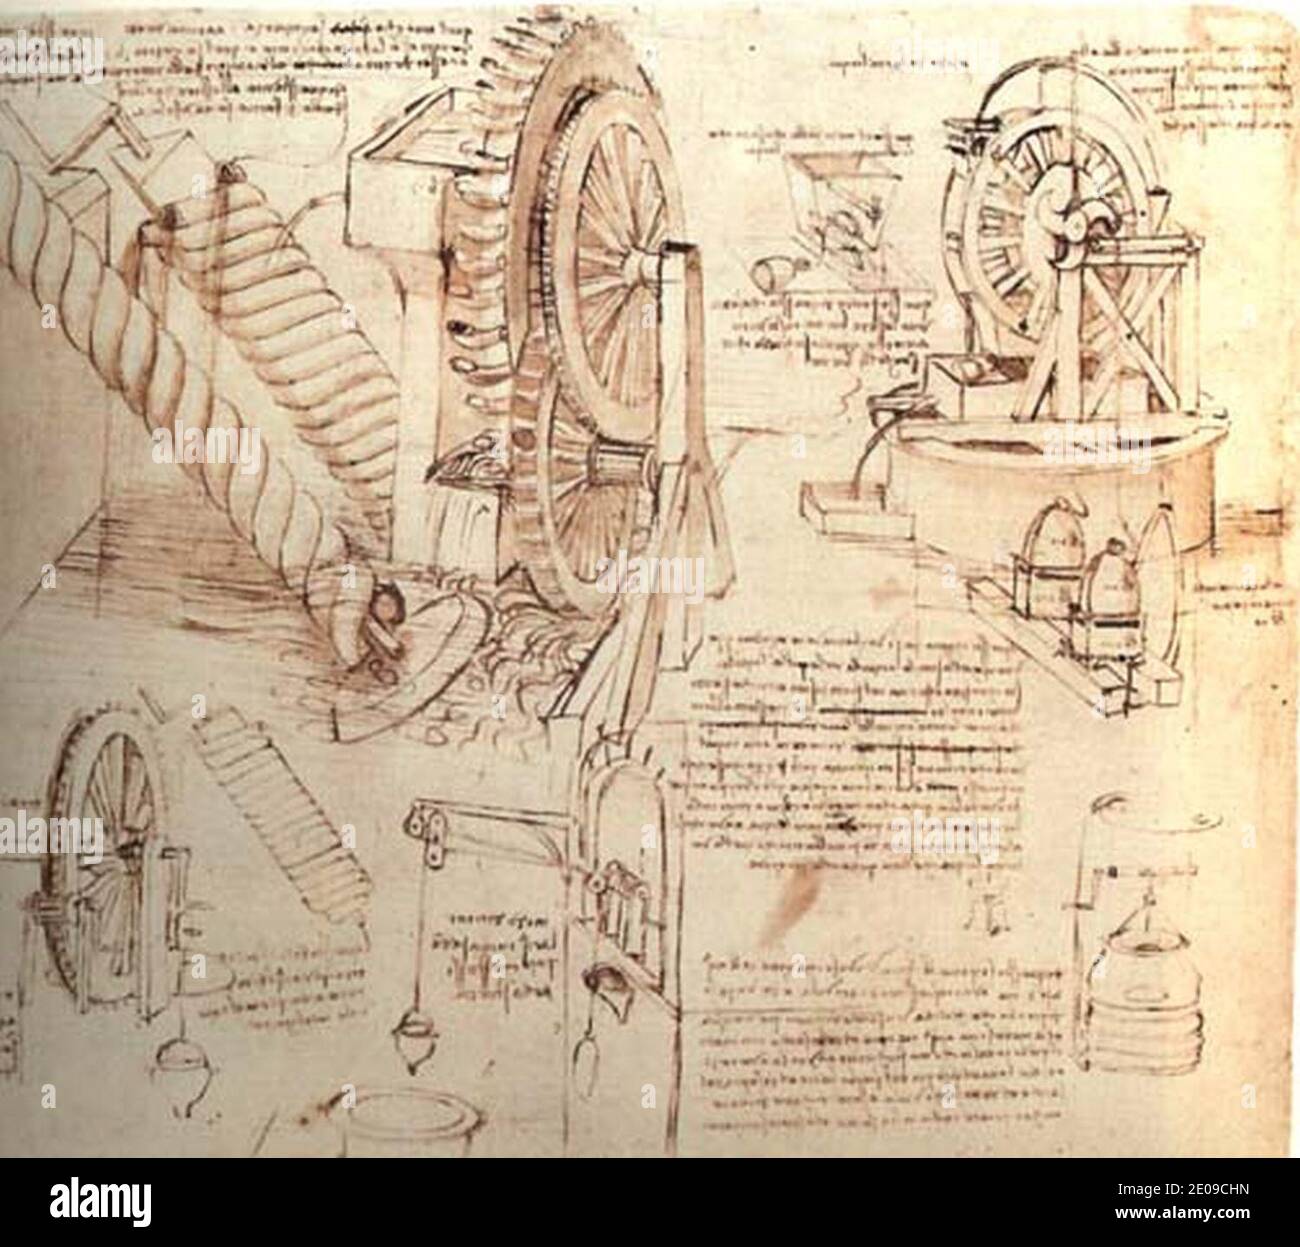 Leonardo da vinci, Drawings of Water Lifting Devices. Stock Photo